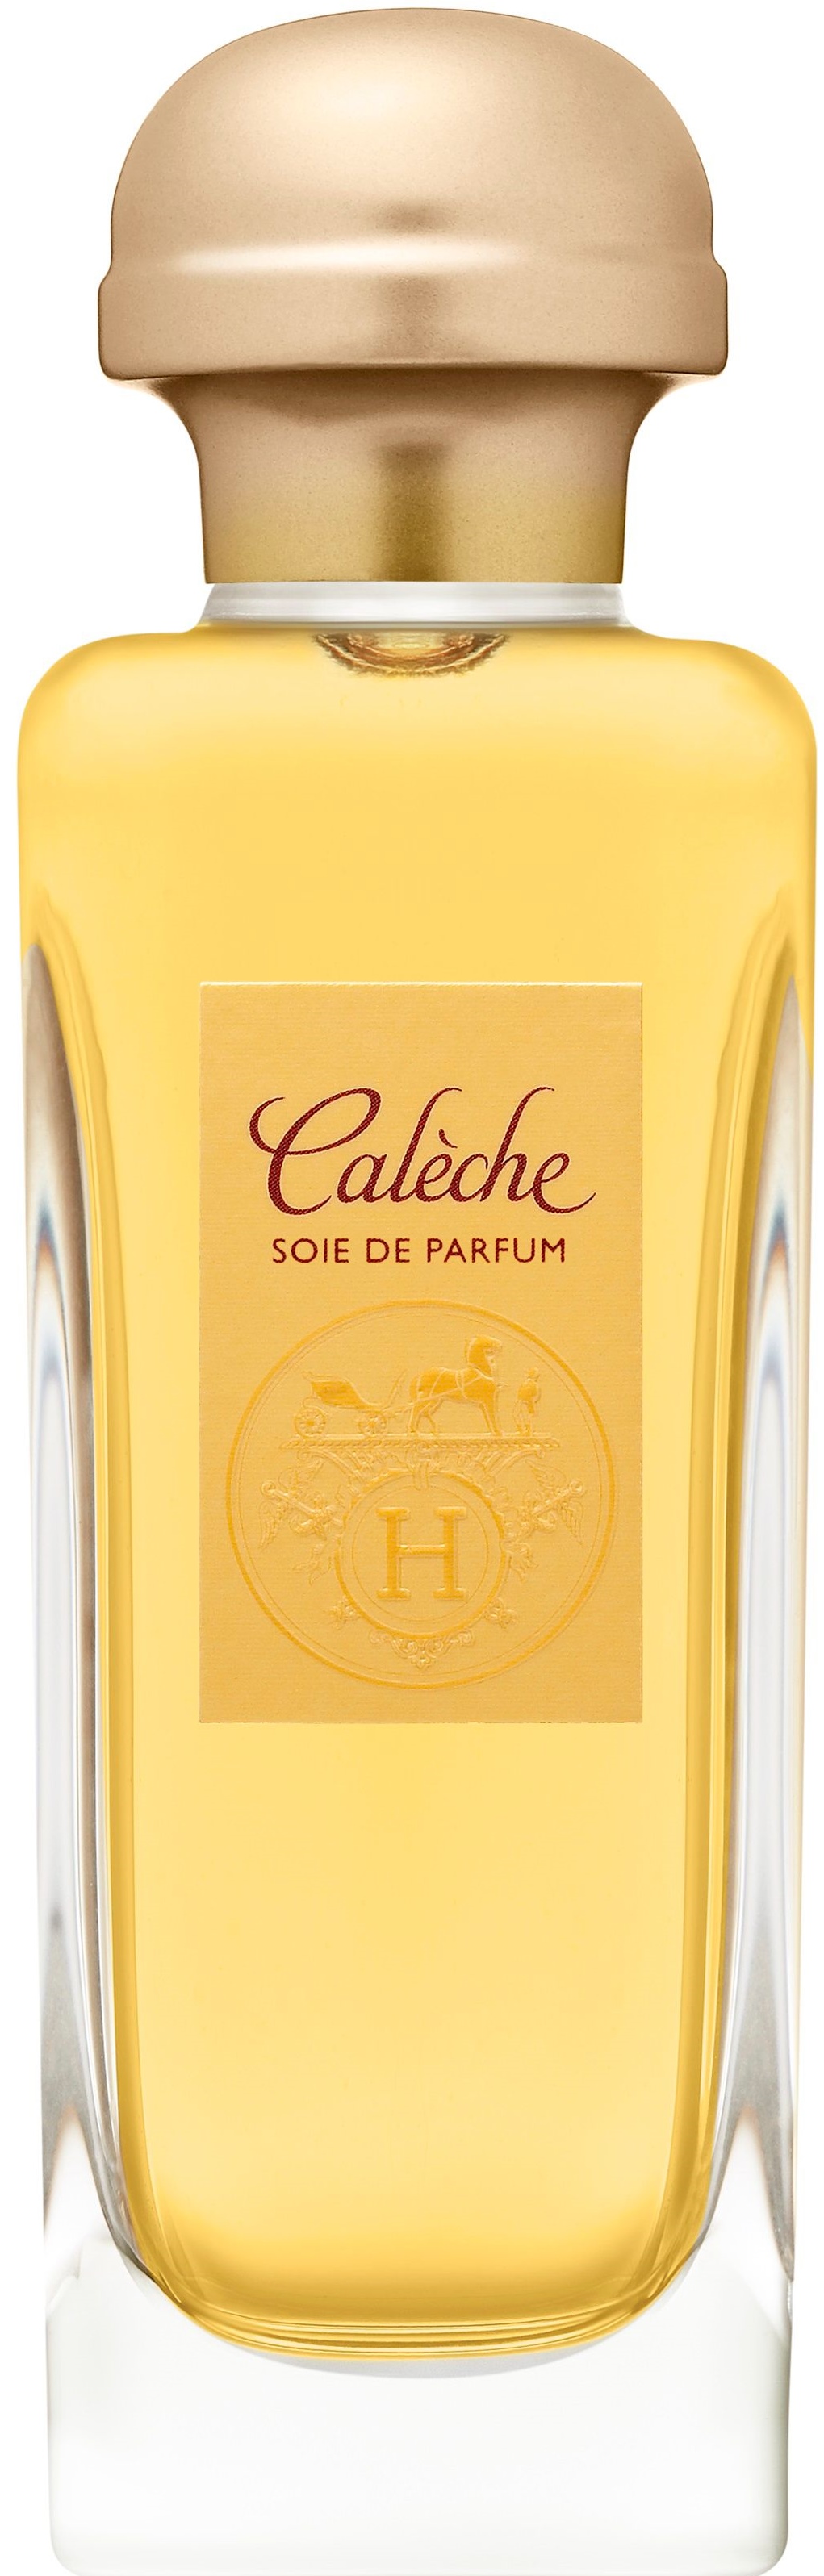 Hermes Caleche Soie de Parfum